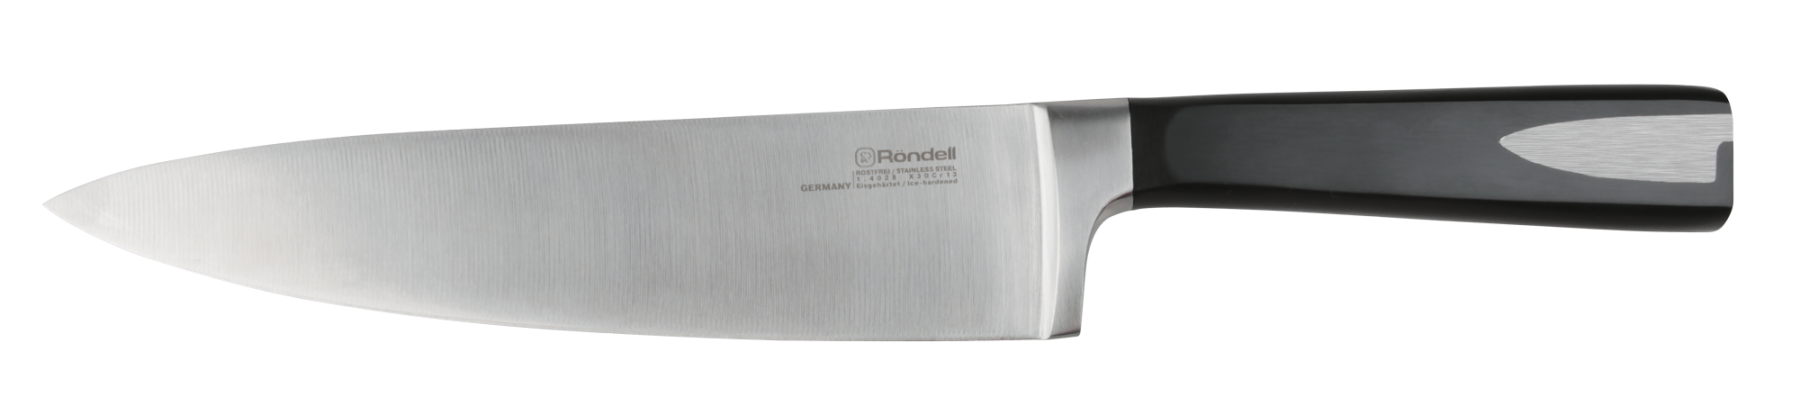 Нож поварской Rondell Cascara 20 см. RD-685